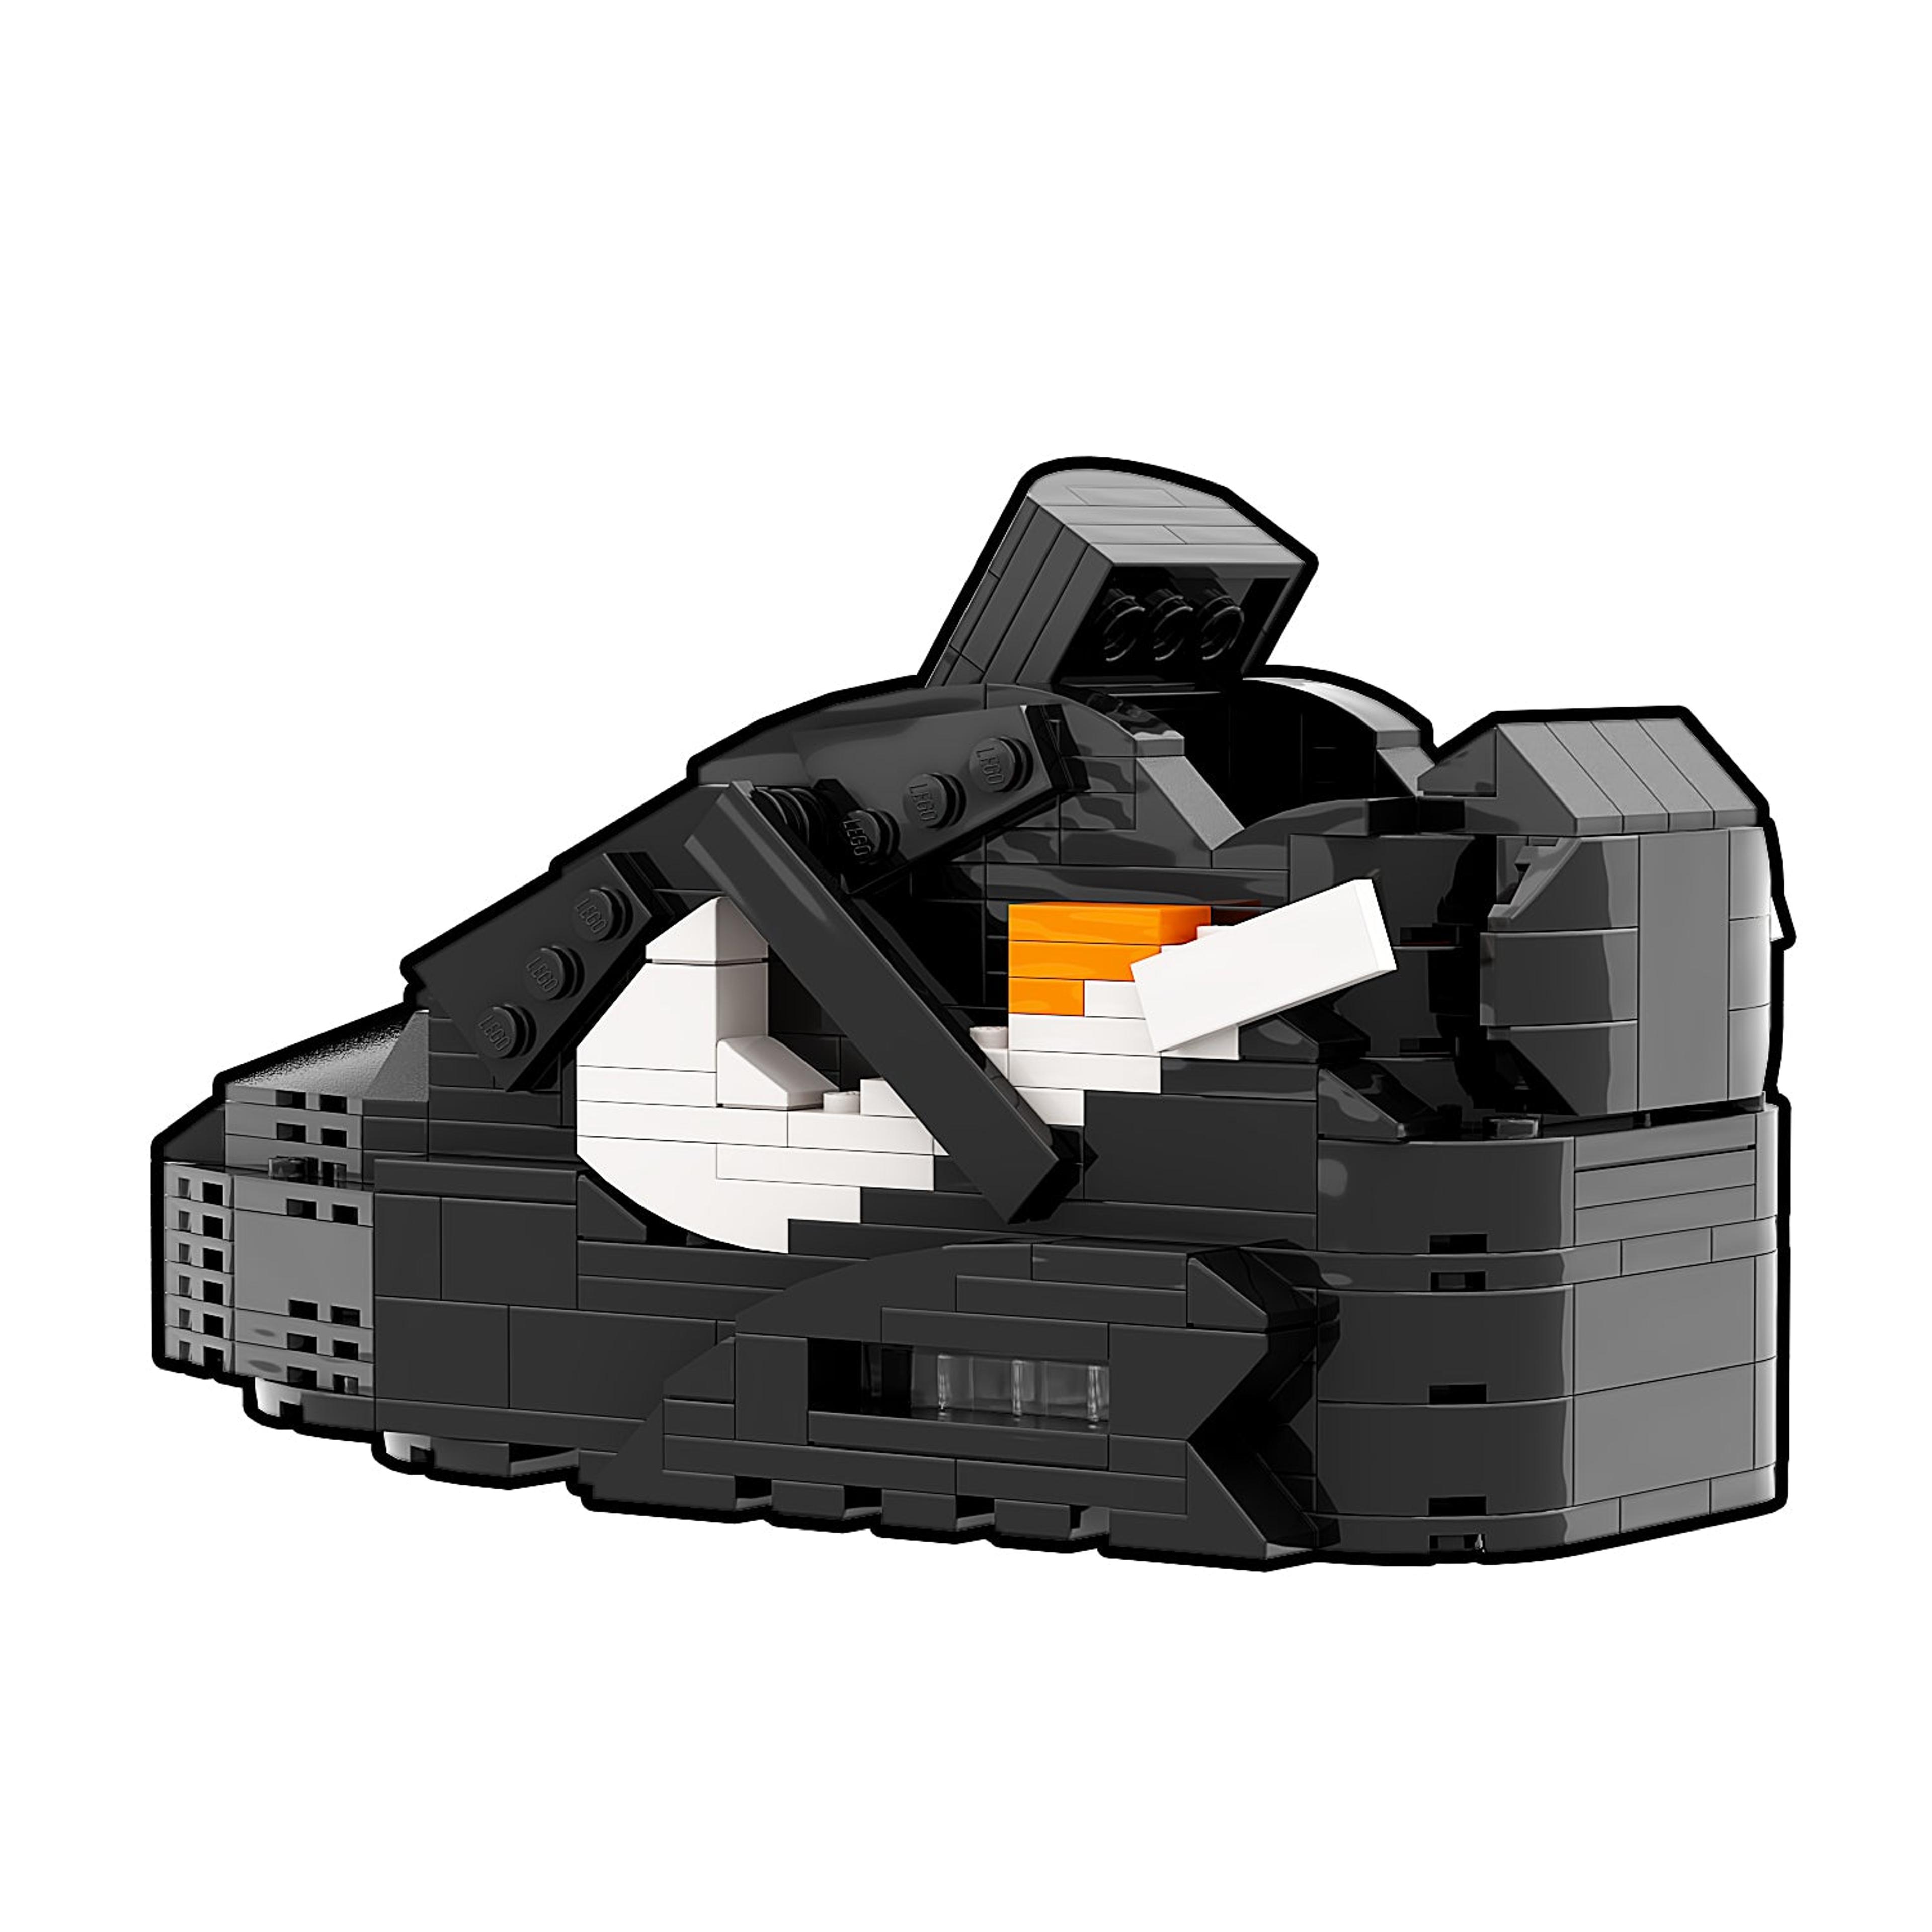 Alternate View 3 of REGULAR Air Max 90 "Off-White Black" Sneaker Bricks with Mini Fi